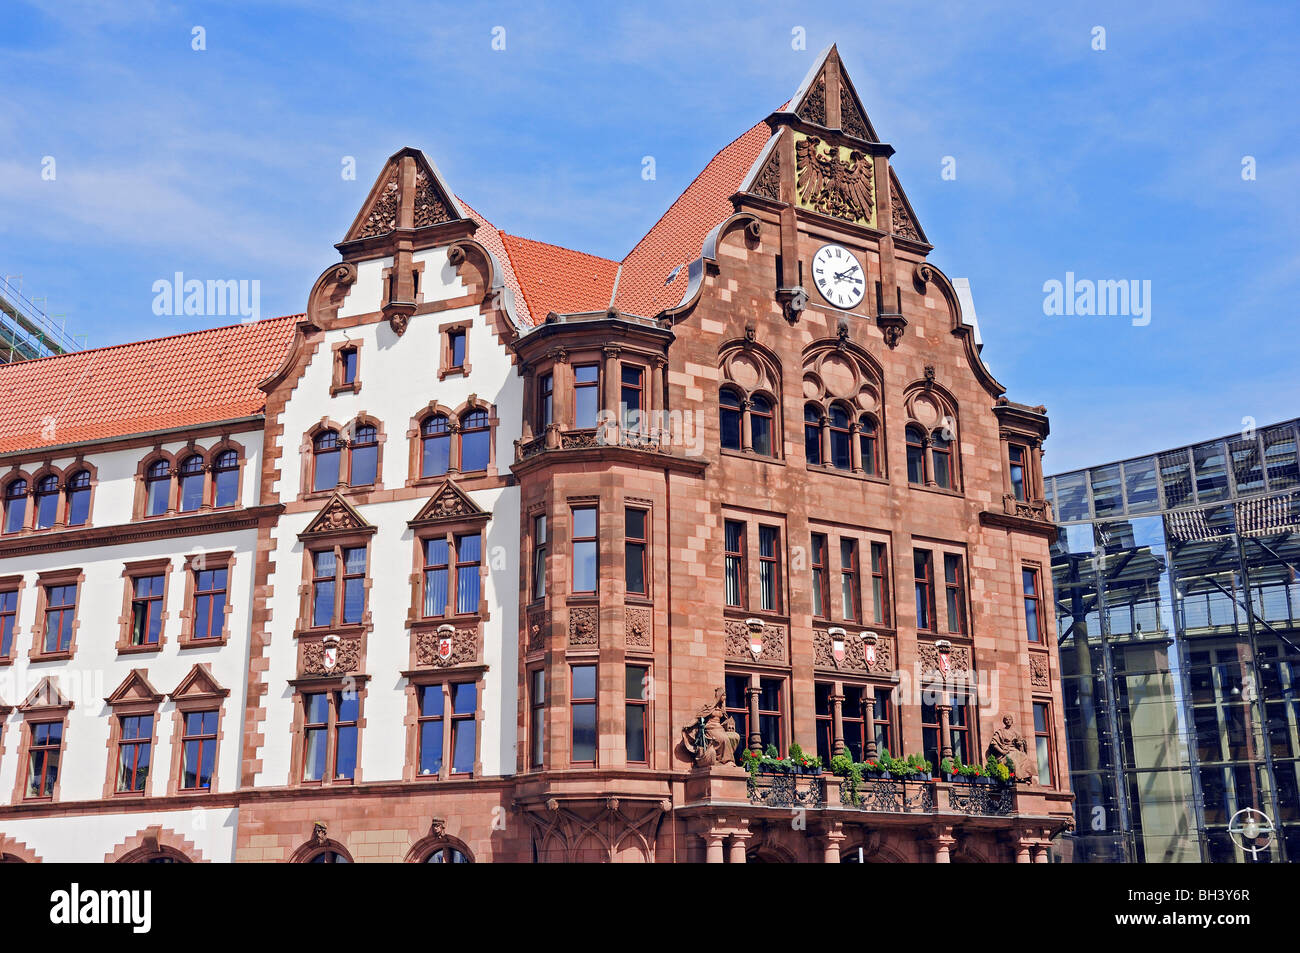 Old town hall / Dortmund Stock Photo